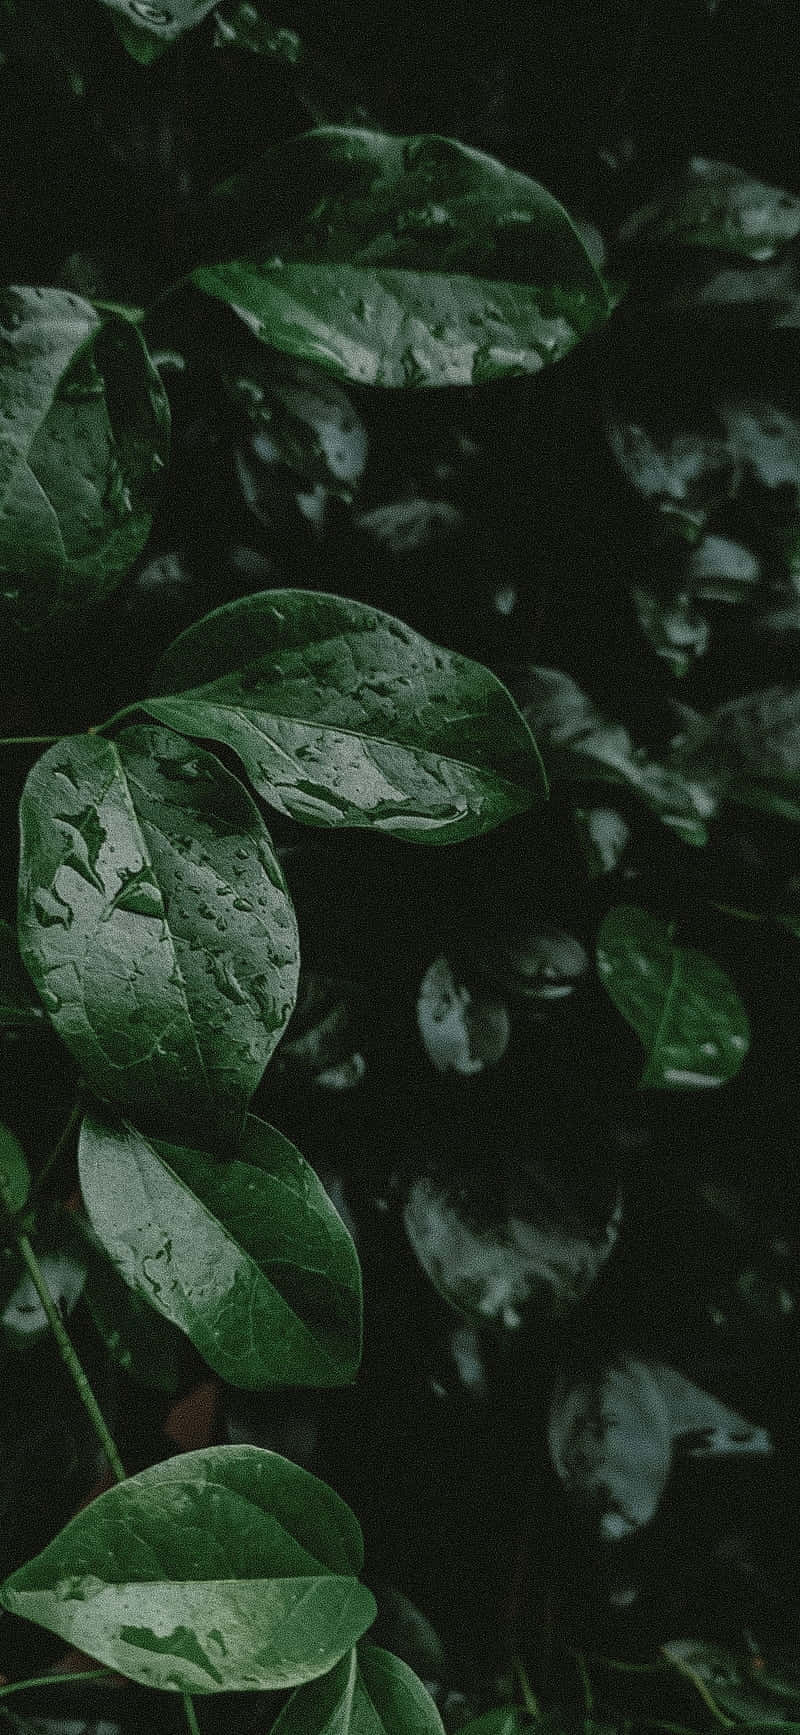 Moody Green Leaves Dark Backdrop.jpg Wallpaper